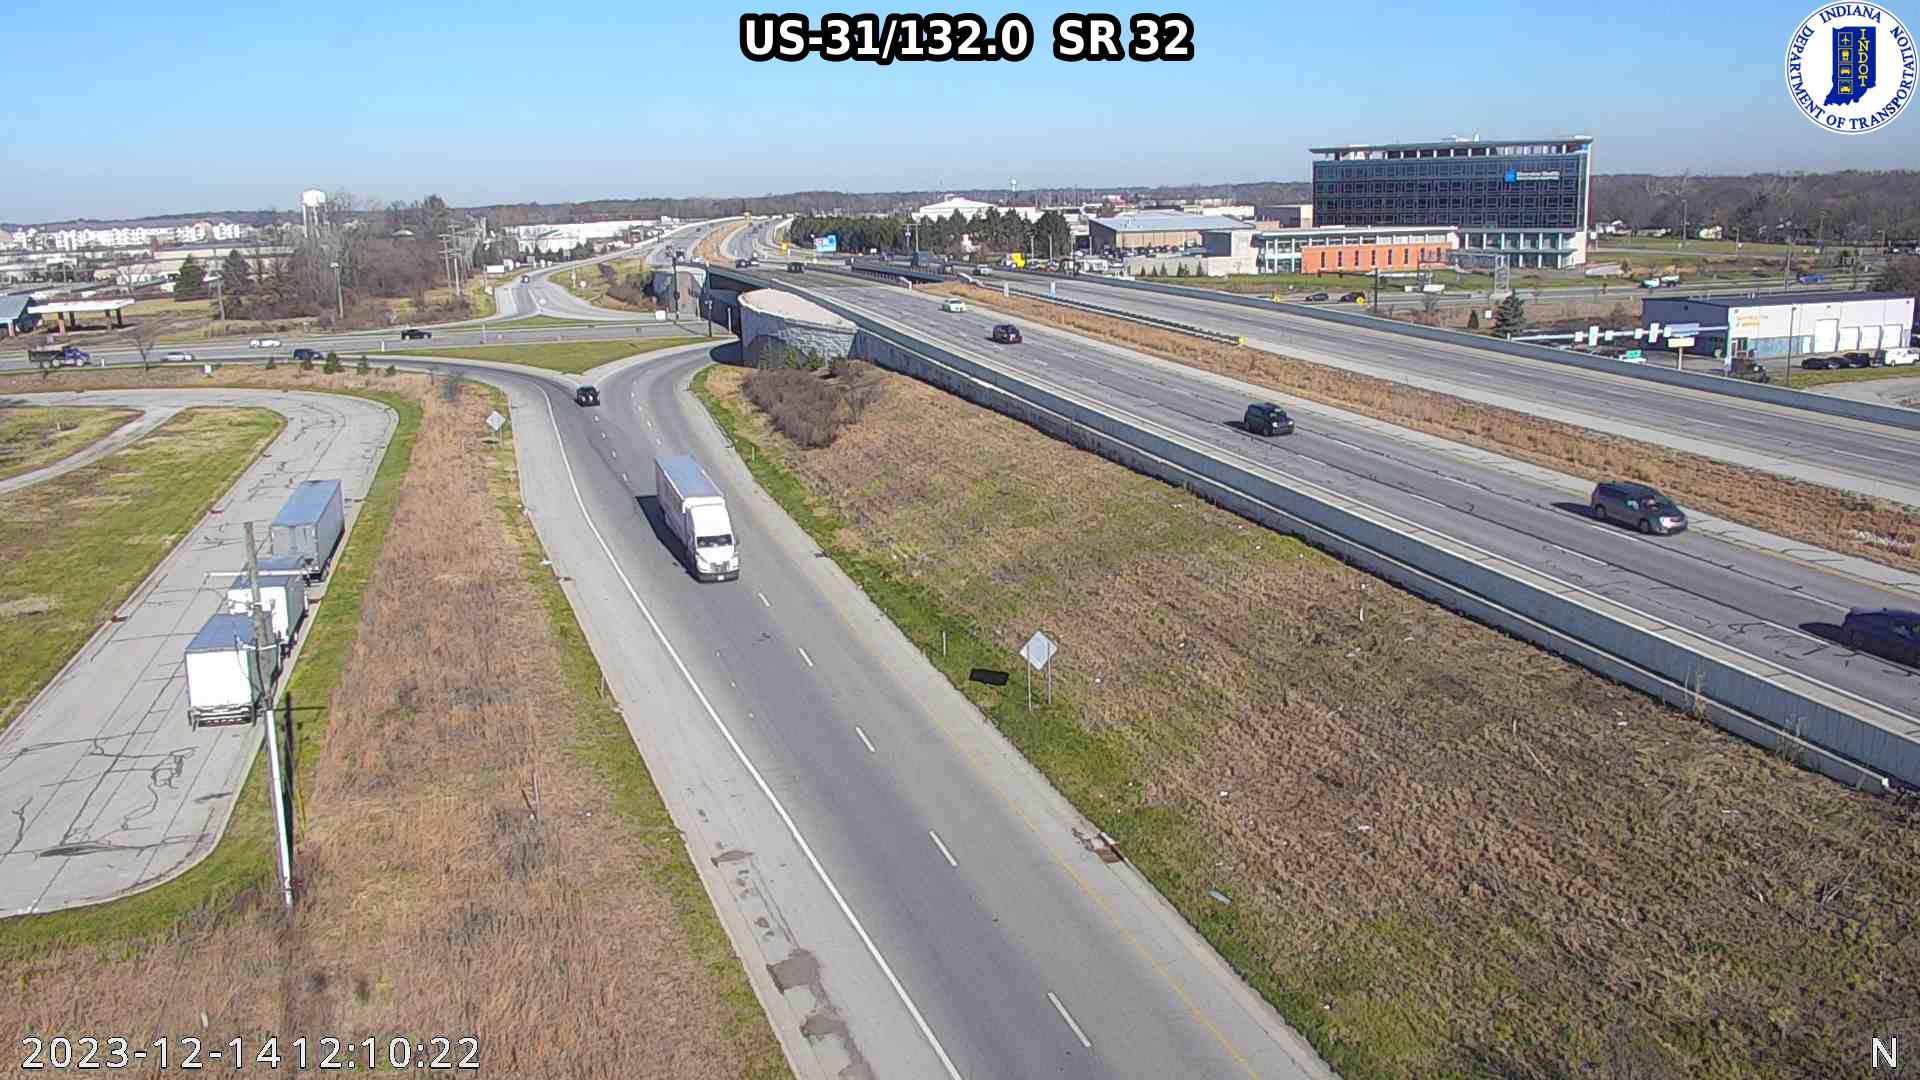 Traffic Cam Westfield: US-31: US-31/132.0 SR Player